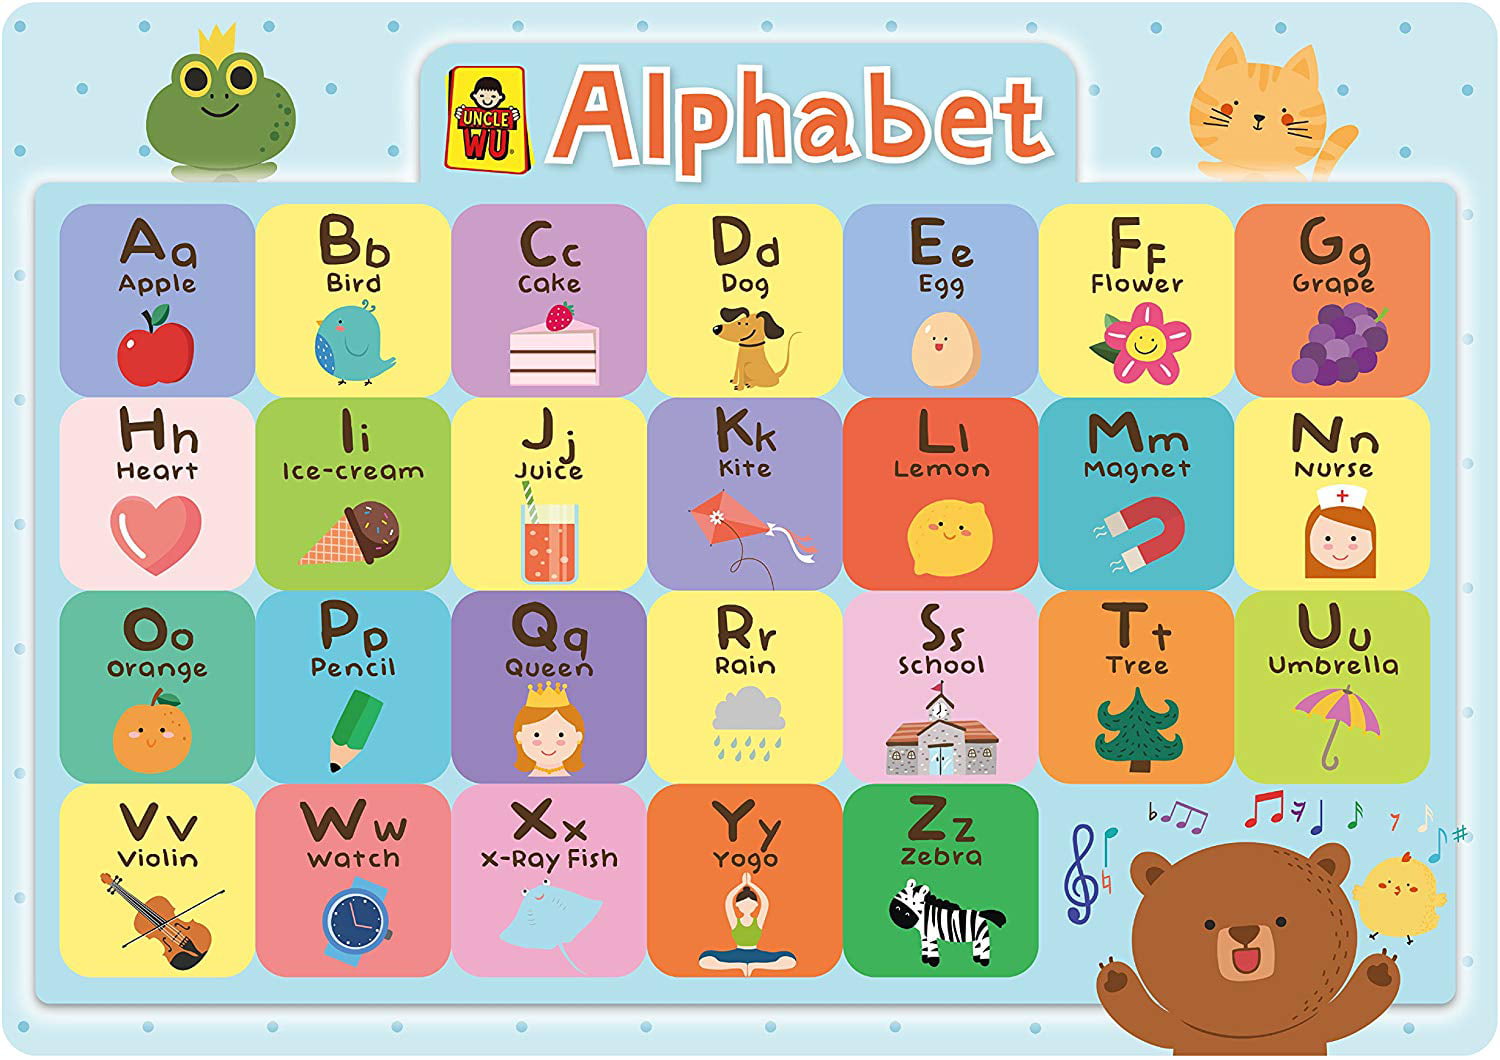 Alphabet Children's Educational Placemat Learning Mealtime Dishwasher safe ABC 